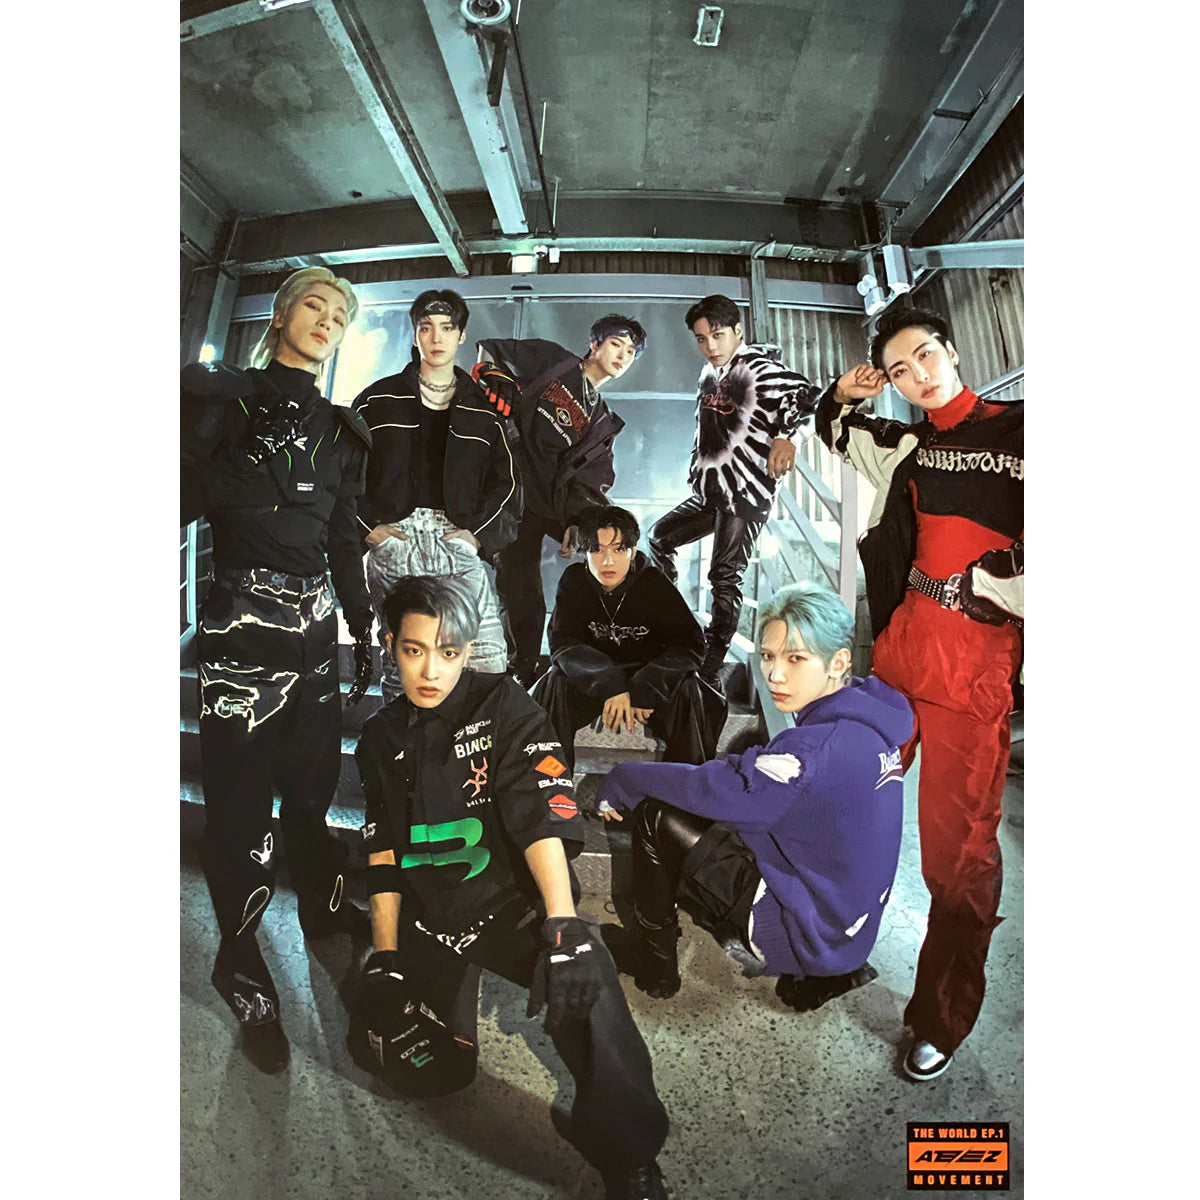 ATEEZ 8th Mini Album - The World EP.1: Movement | Folded Posters